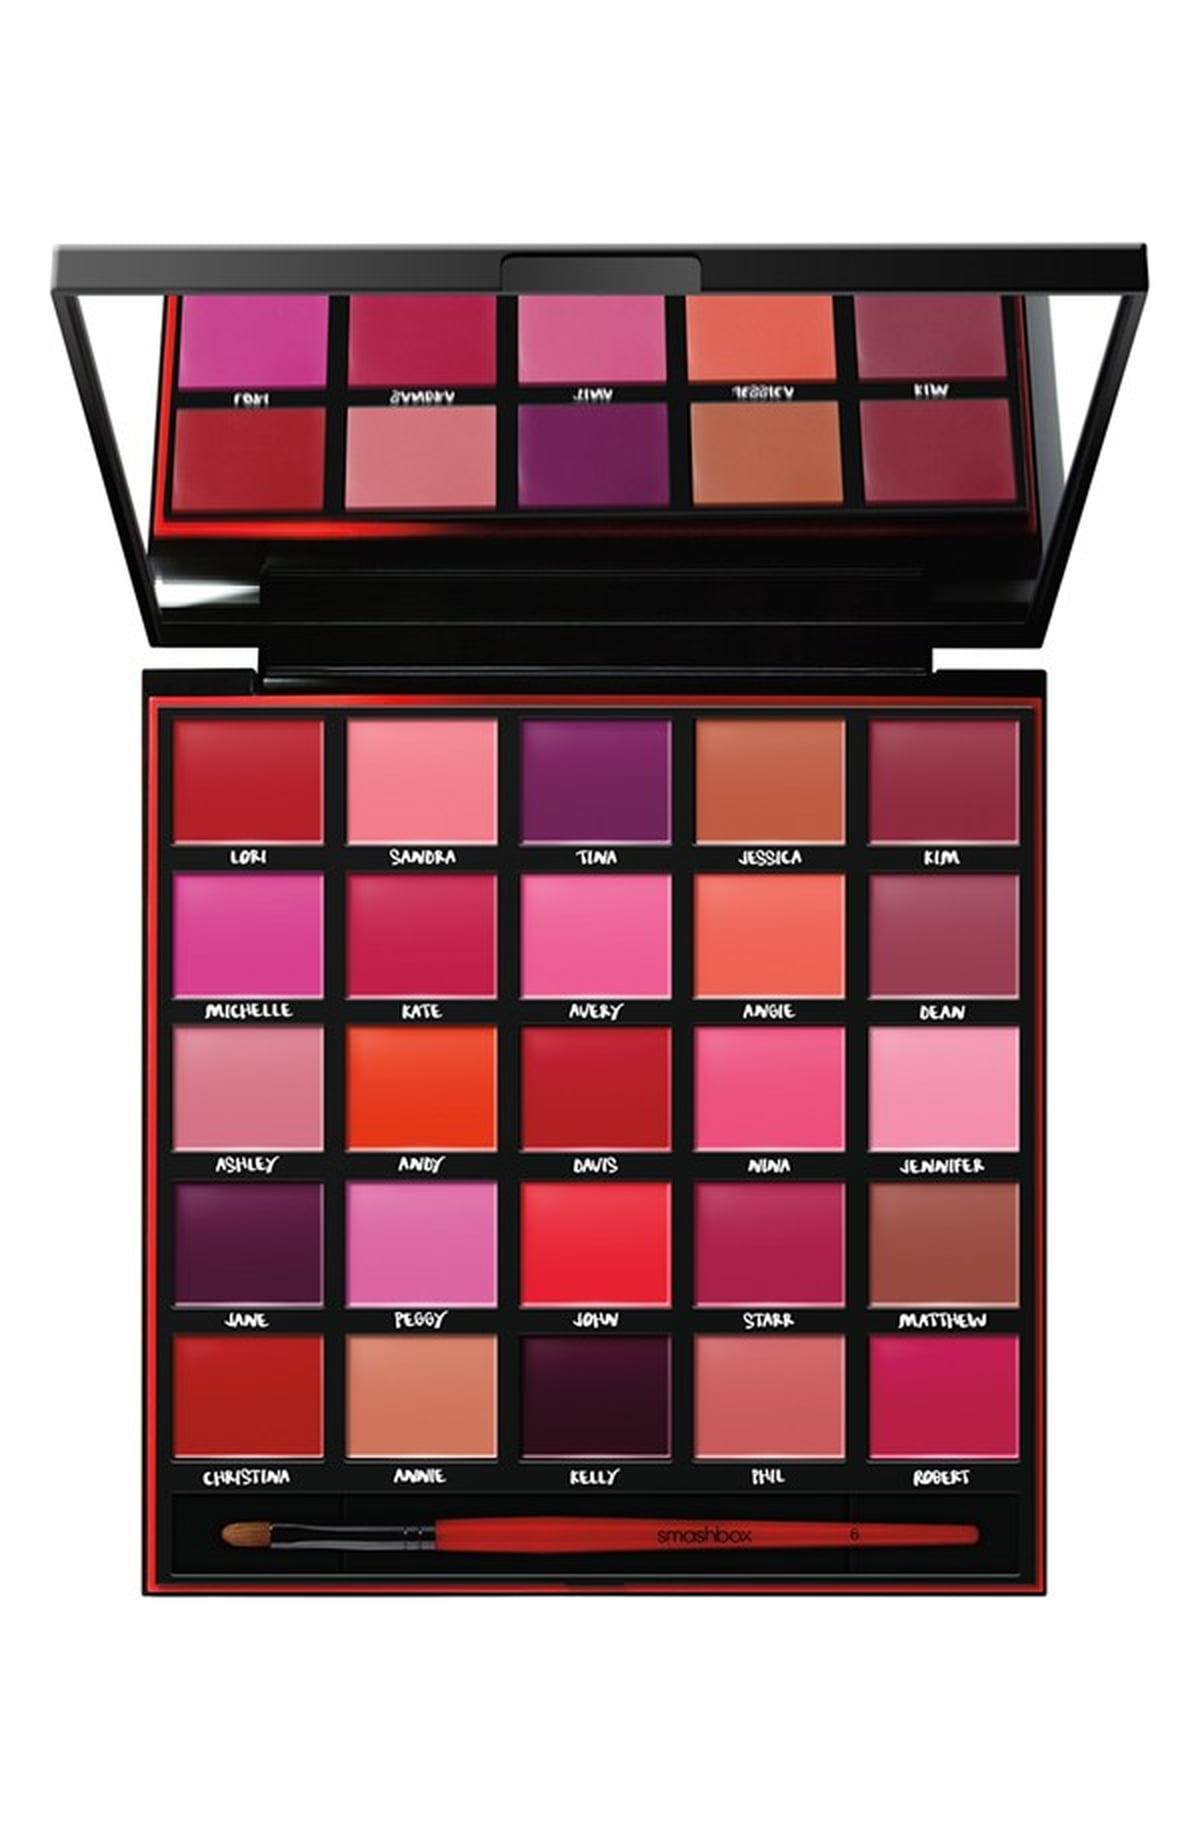 Holiday Makeup Palettes 2015 | POPSUGAR Beauty